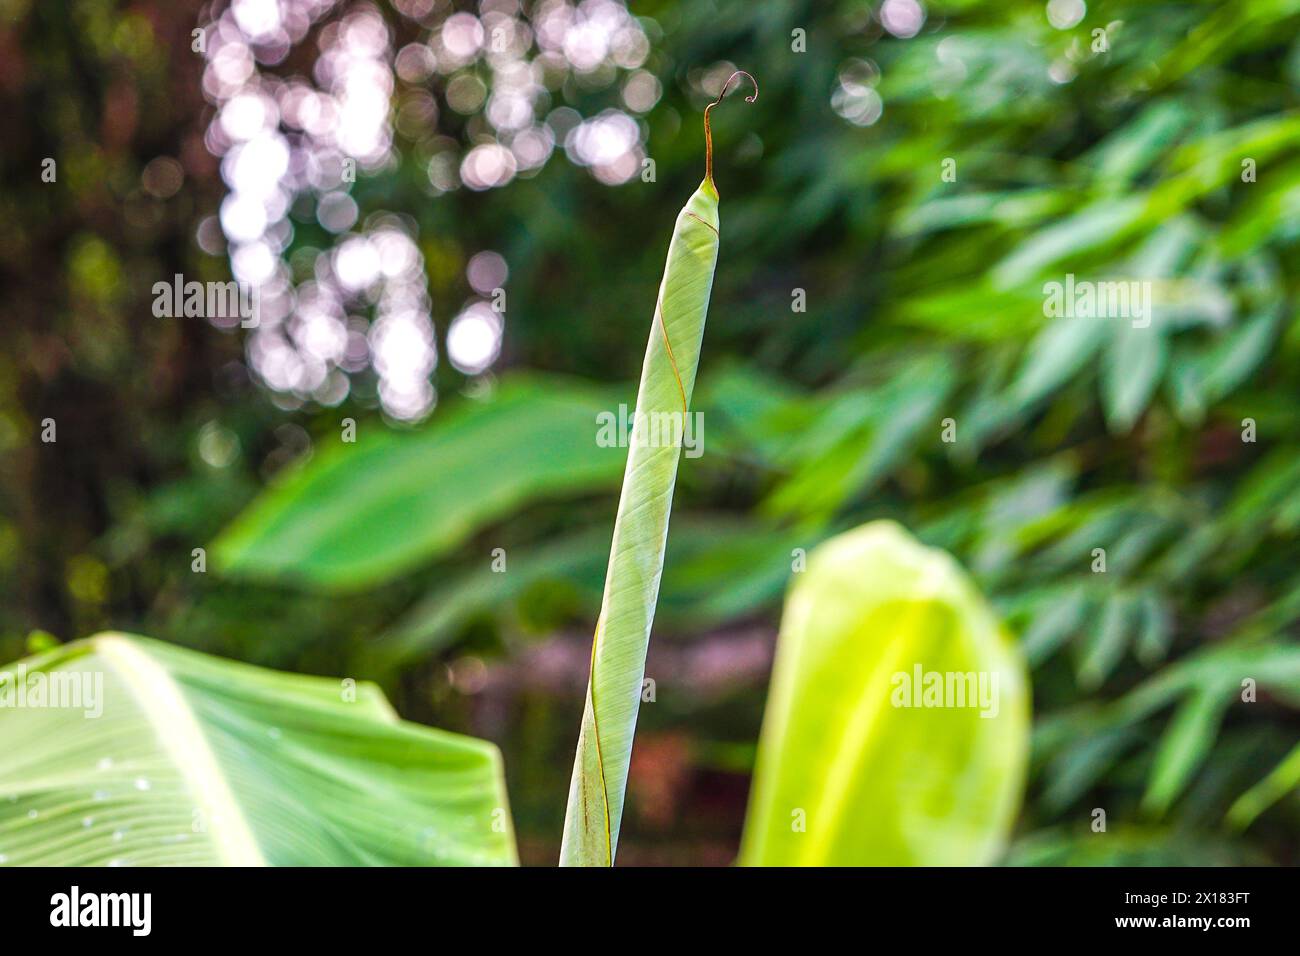 Tender Banana Leaf Close Up View Stock Photo